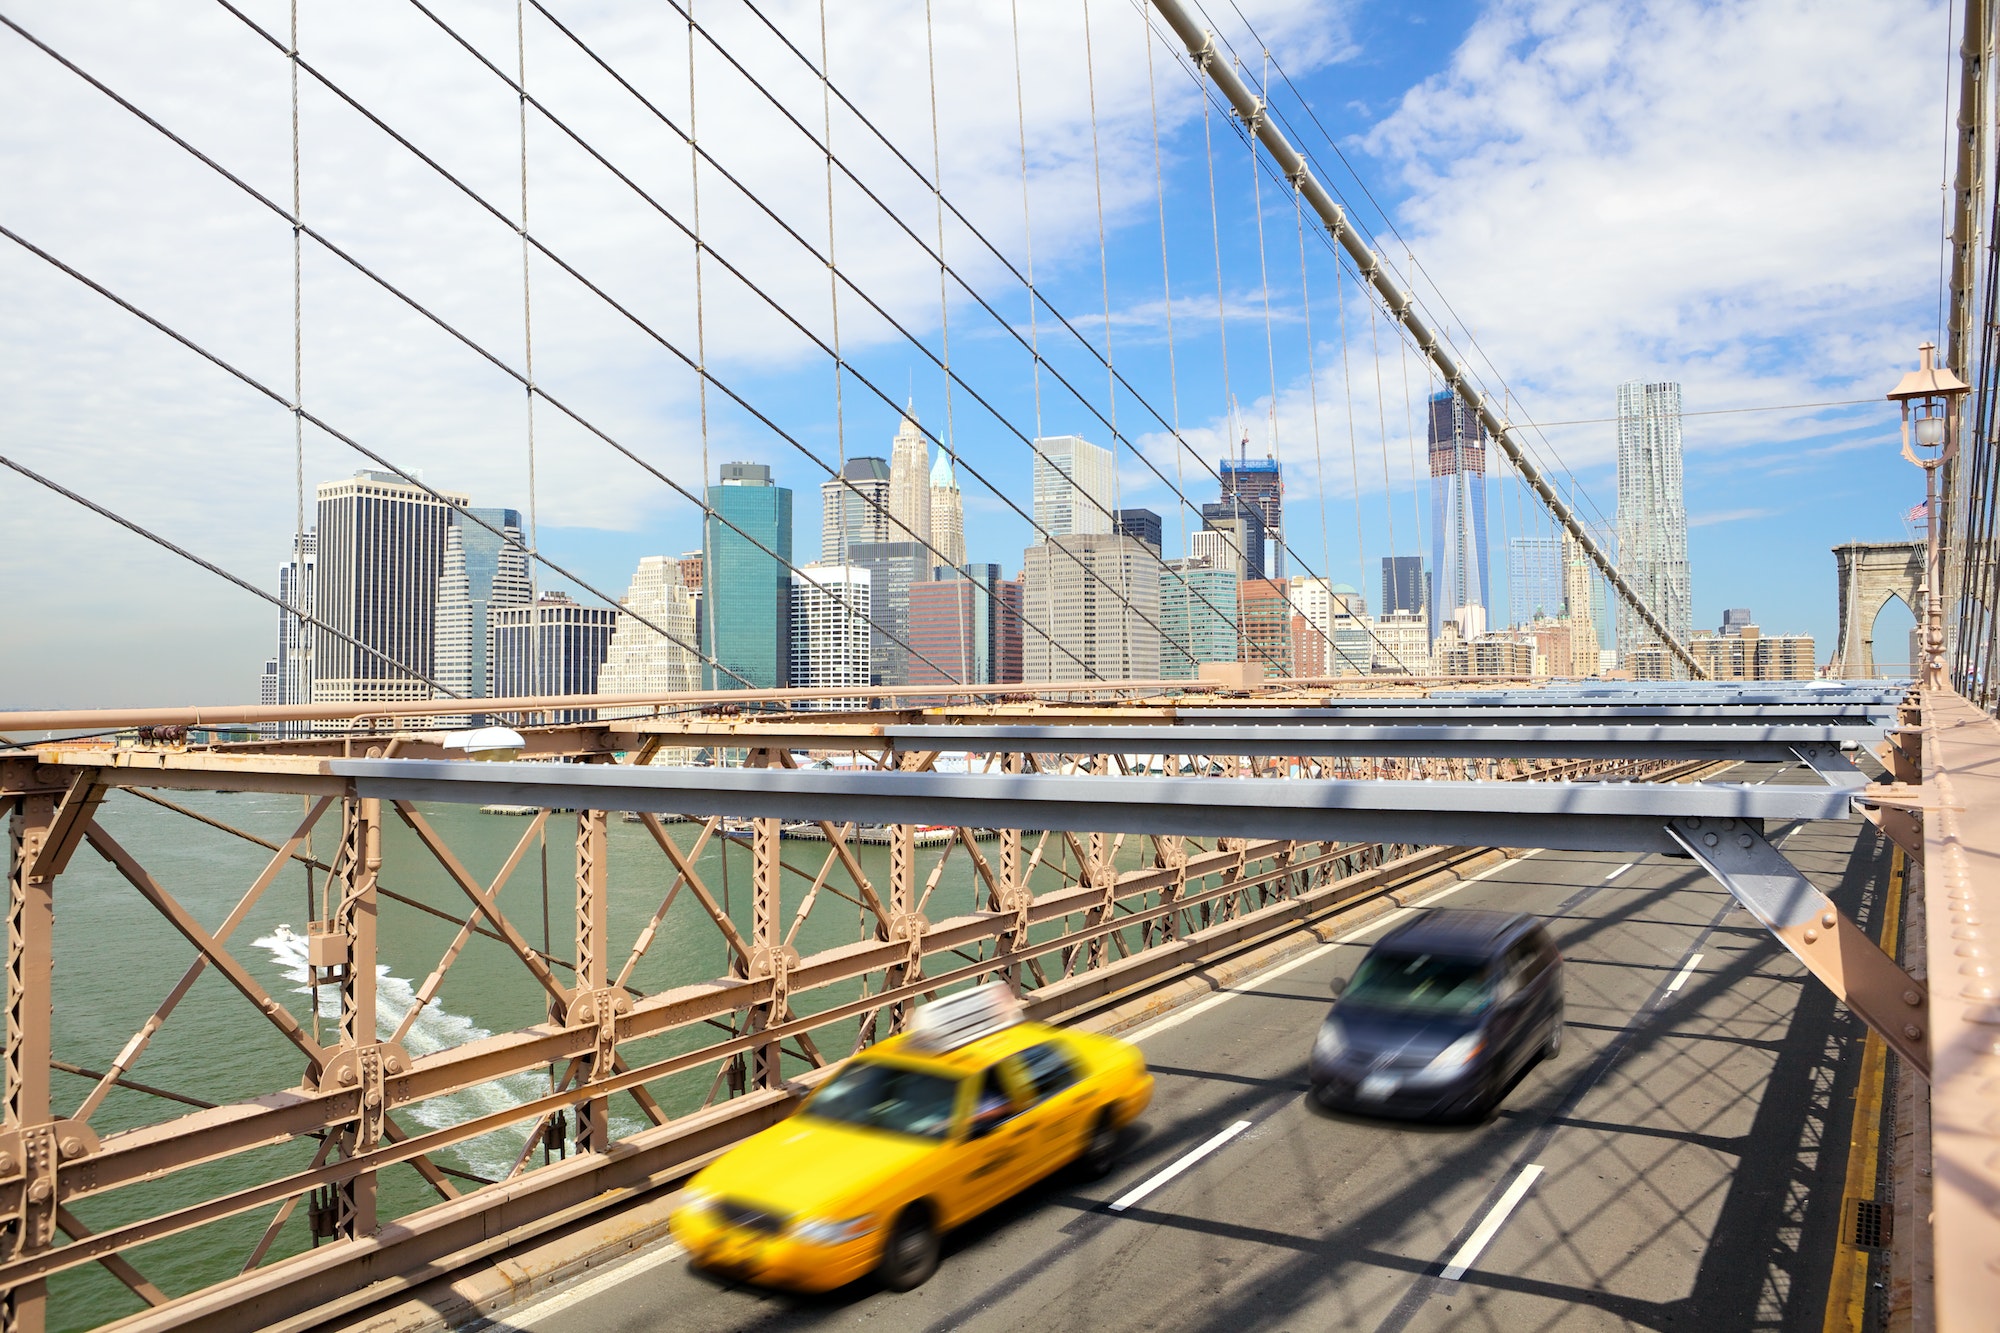 New York, Brooklyn Bridge and taxi cab